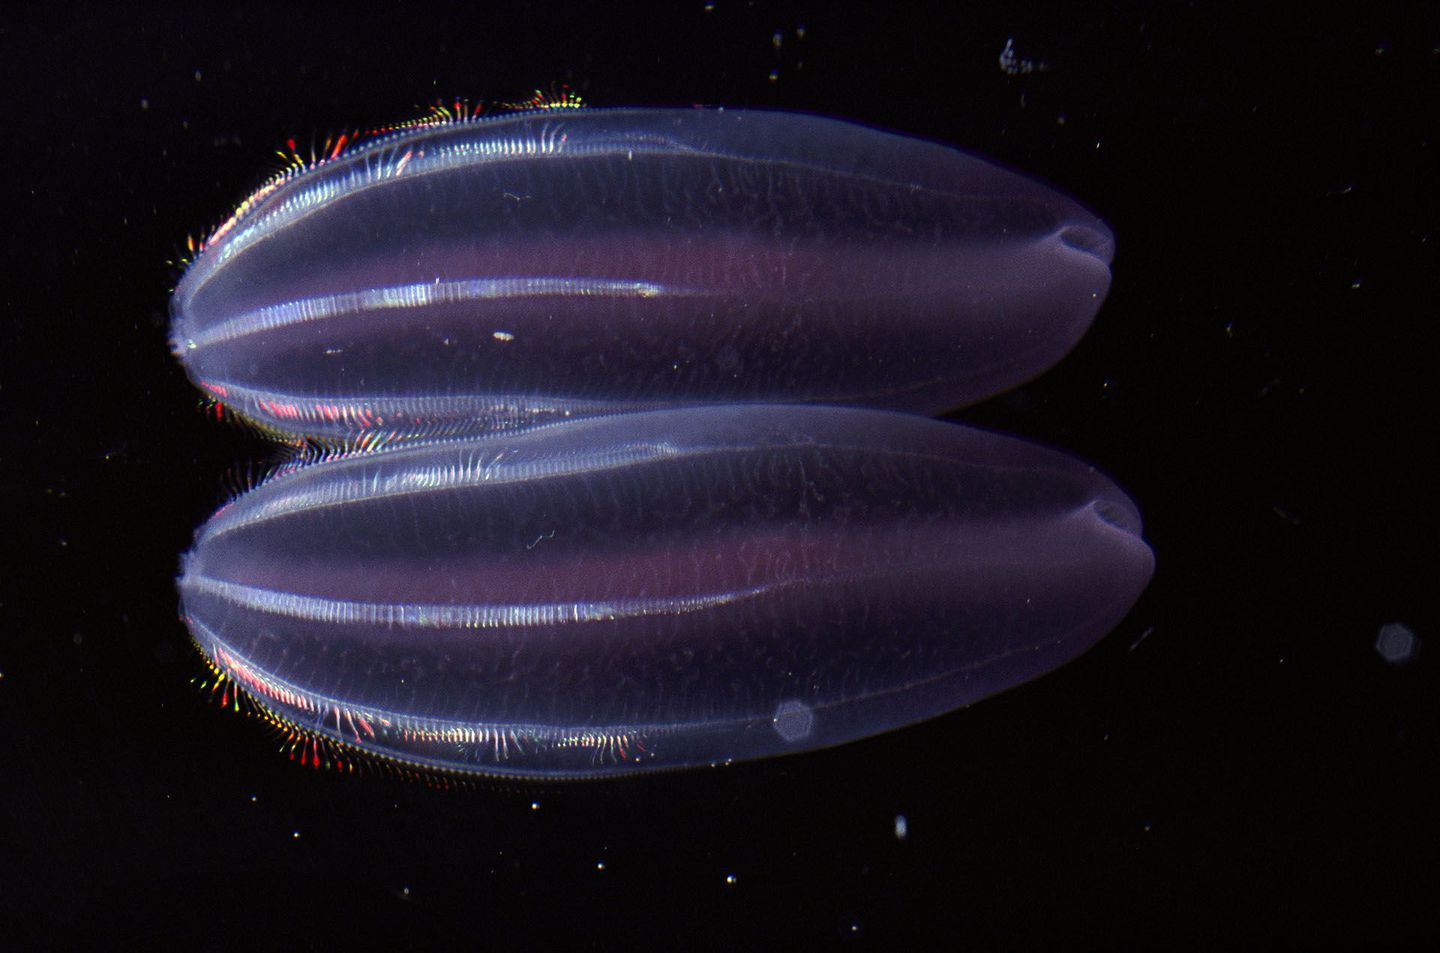 http-%2f%2fmashable-com%2fwp-content%2fgallery%2fbioluminescent-sea-creatures%2f42-33433768